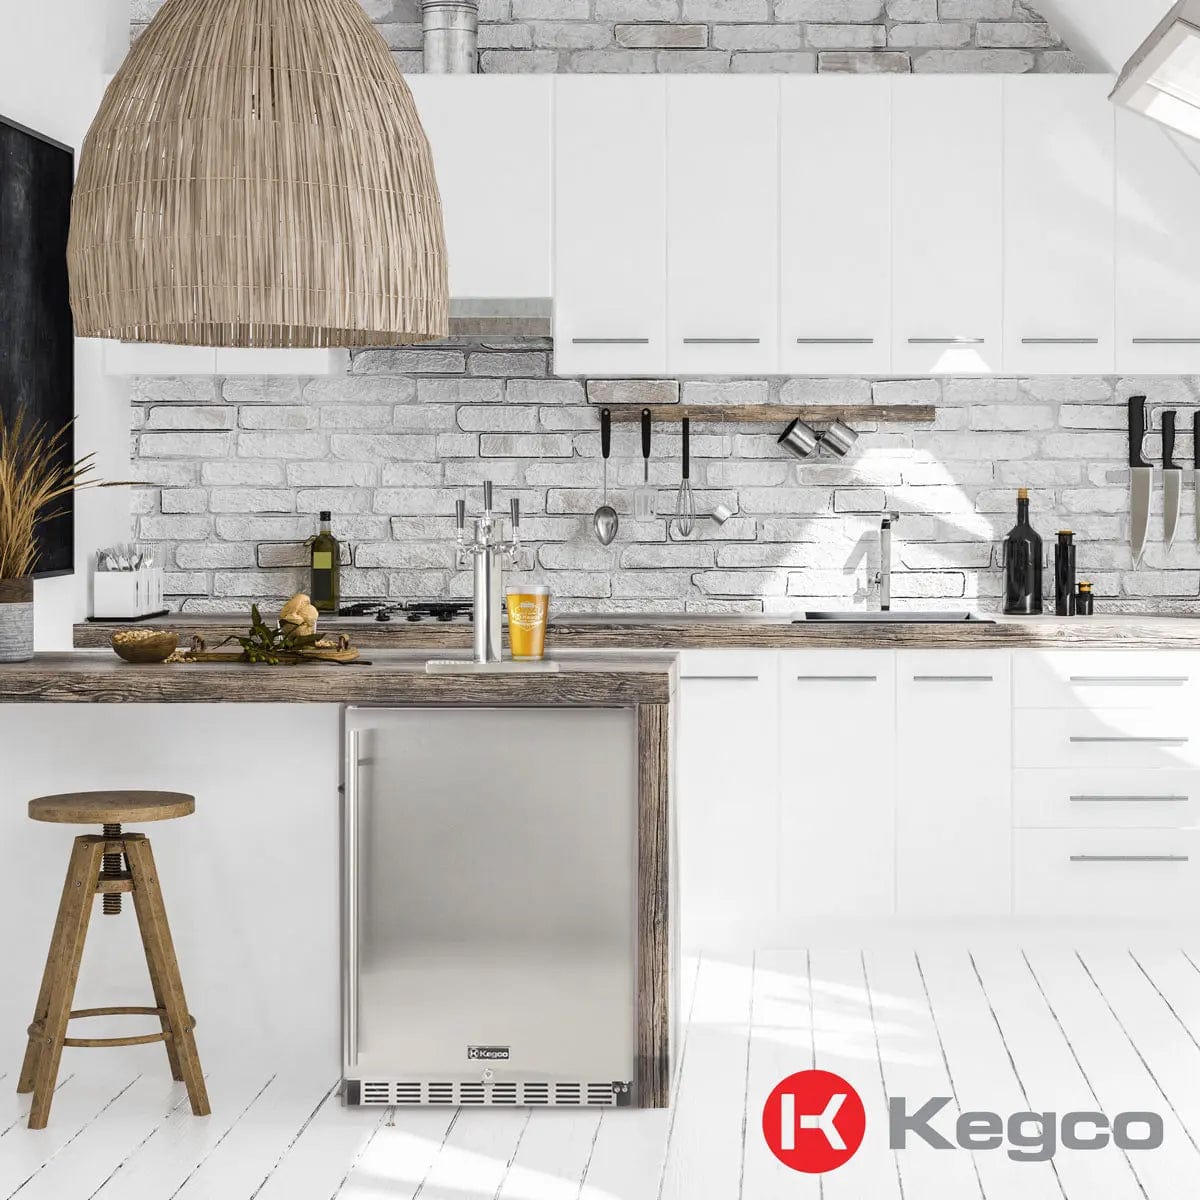 KEGCO Kegerator KEGCO 24" Wide Stainless Steel Built-in Digital Left Kegerator with Kit- HK38BSUL